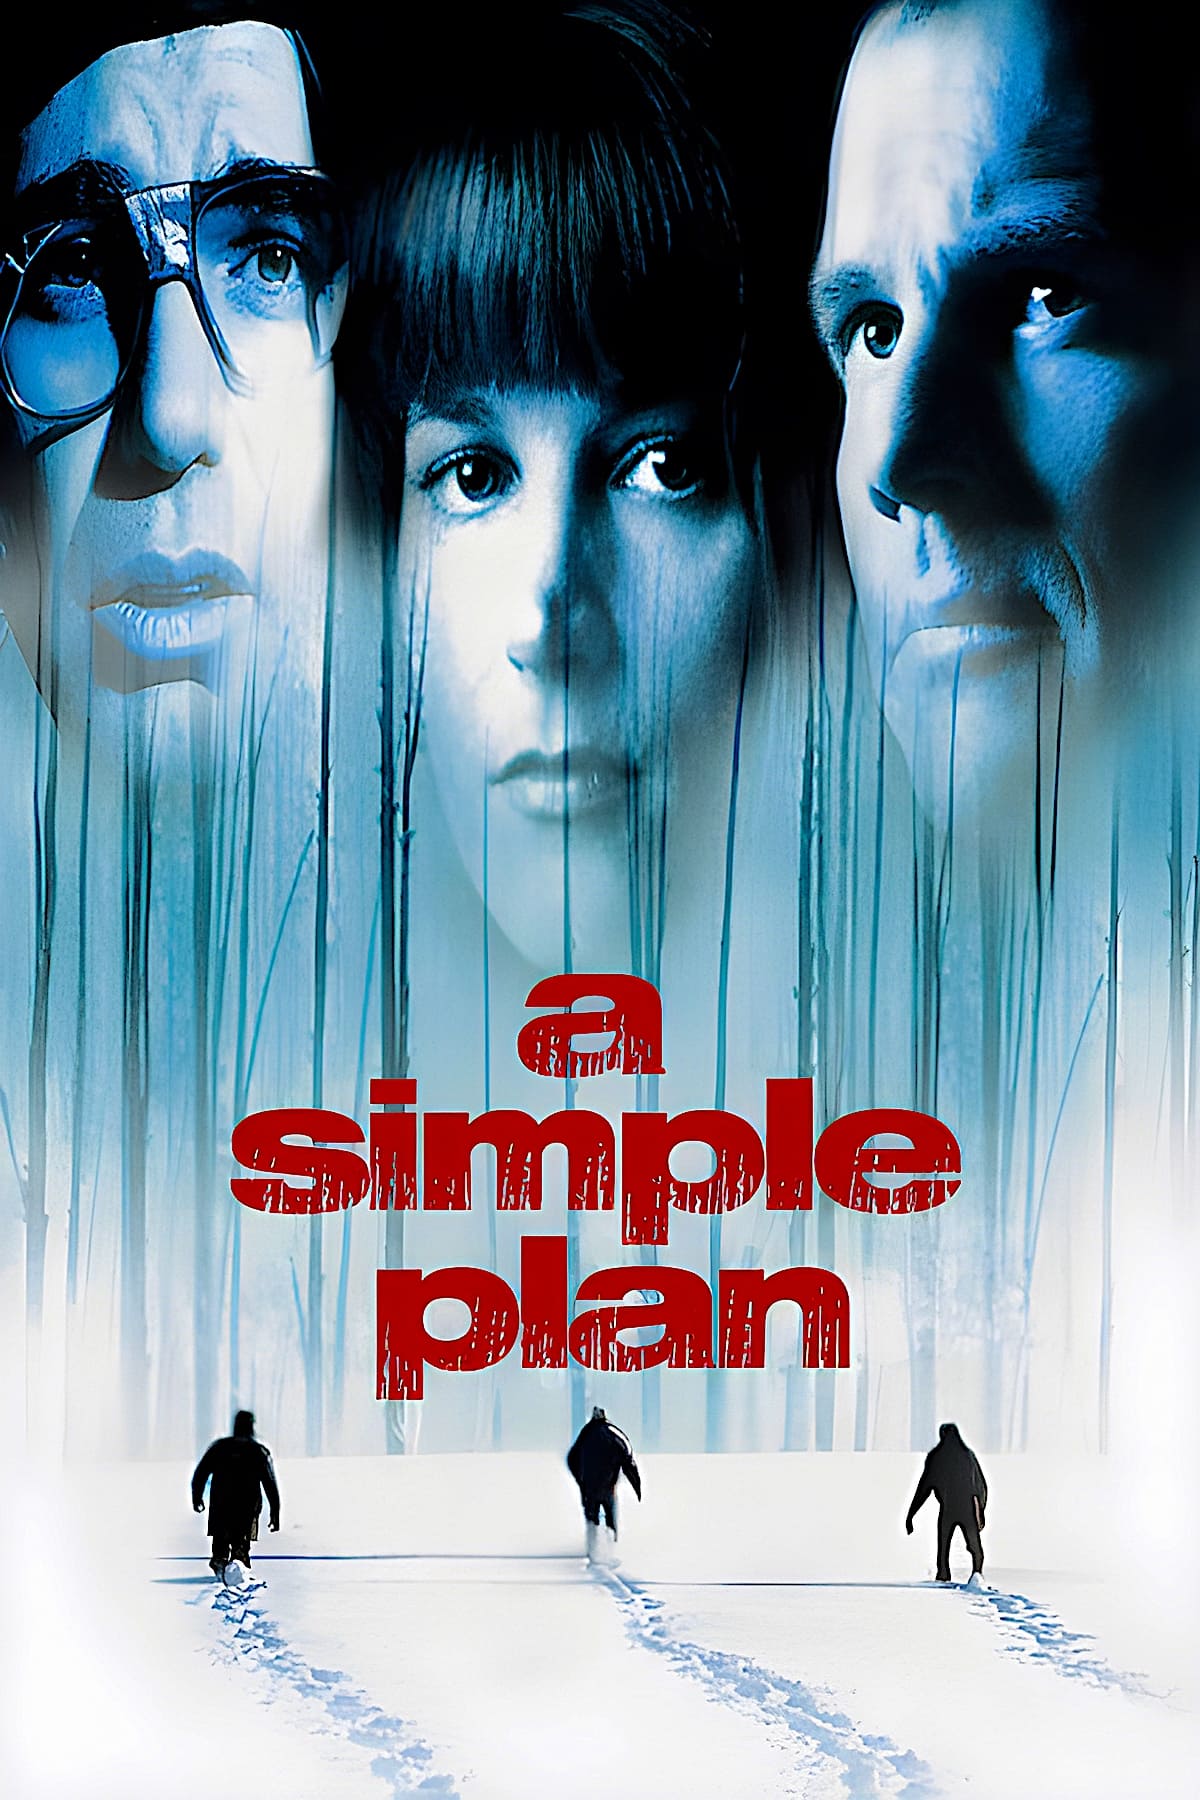 A Simple Plan (1998)